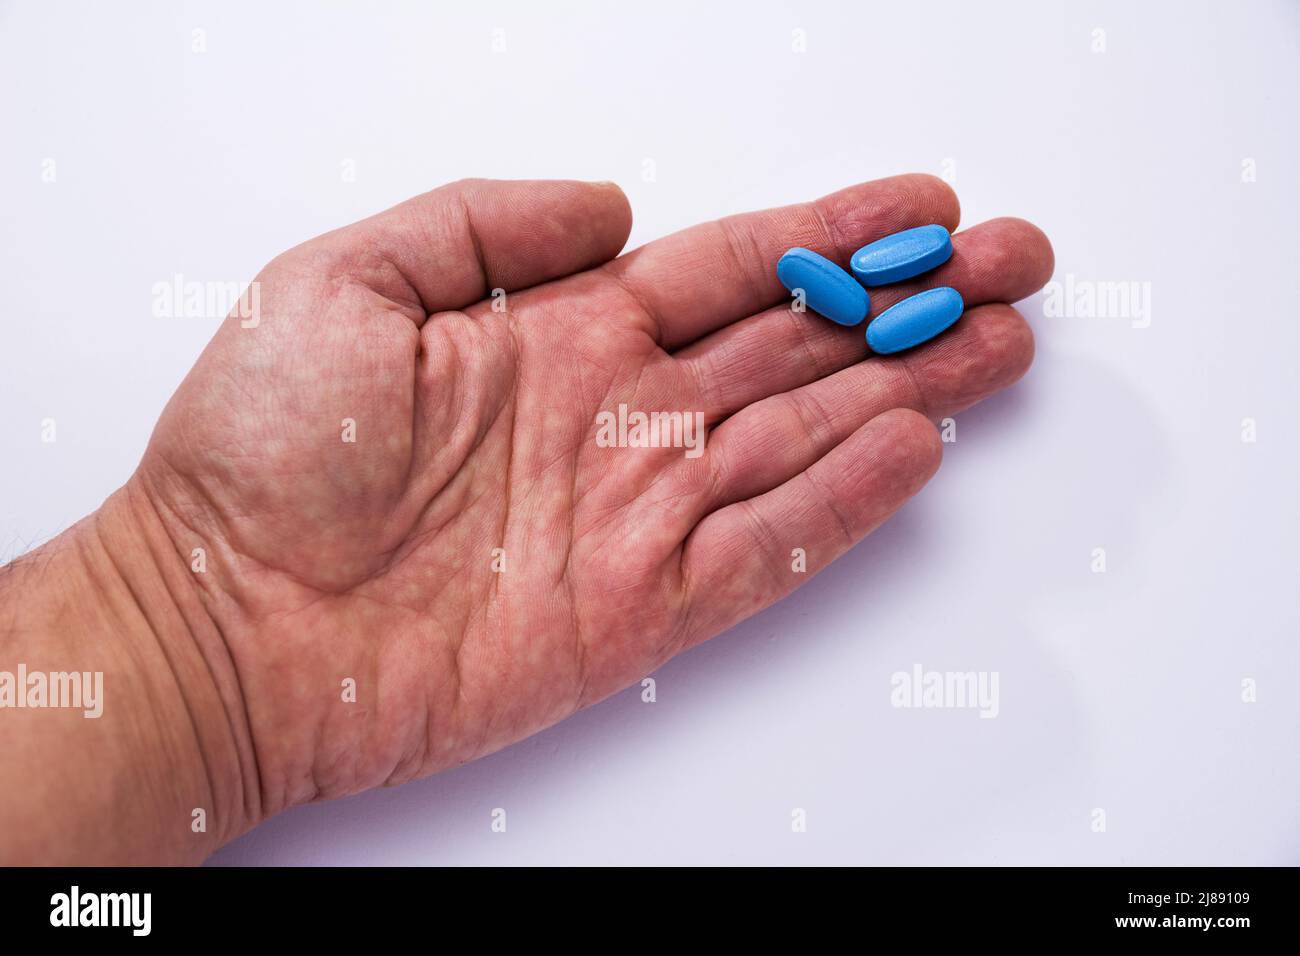 Male hand showing three blue pills Stock Photo